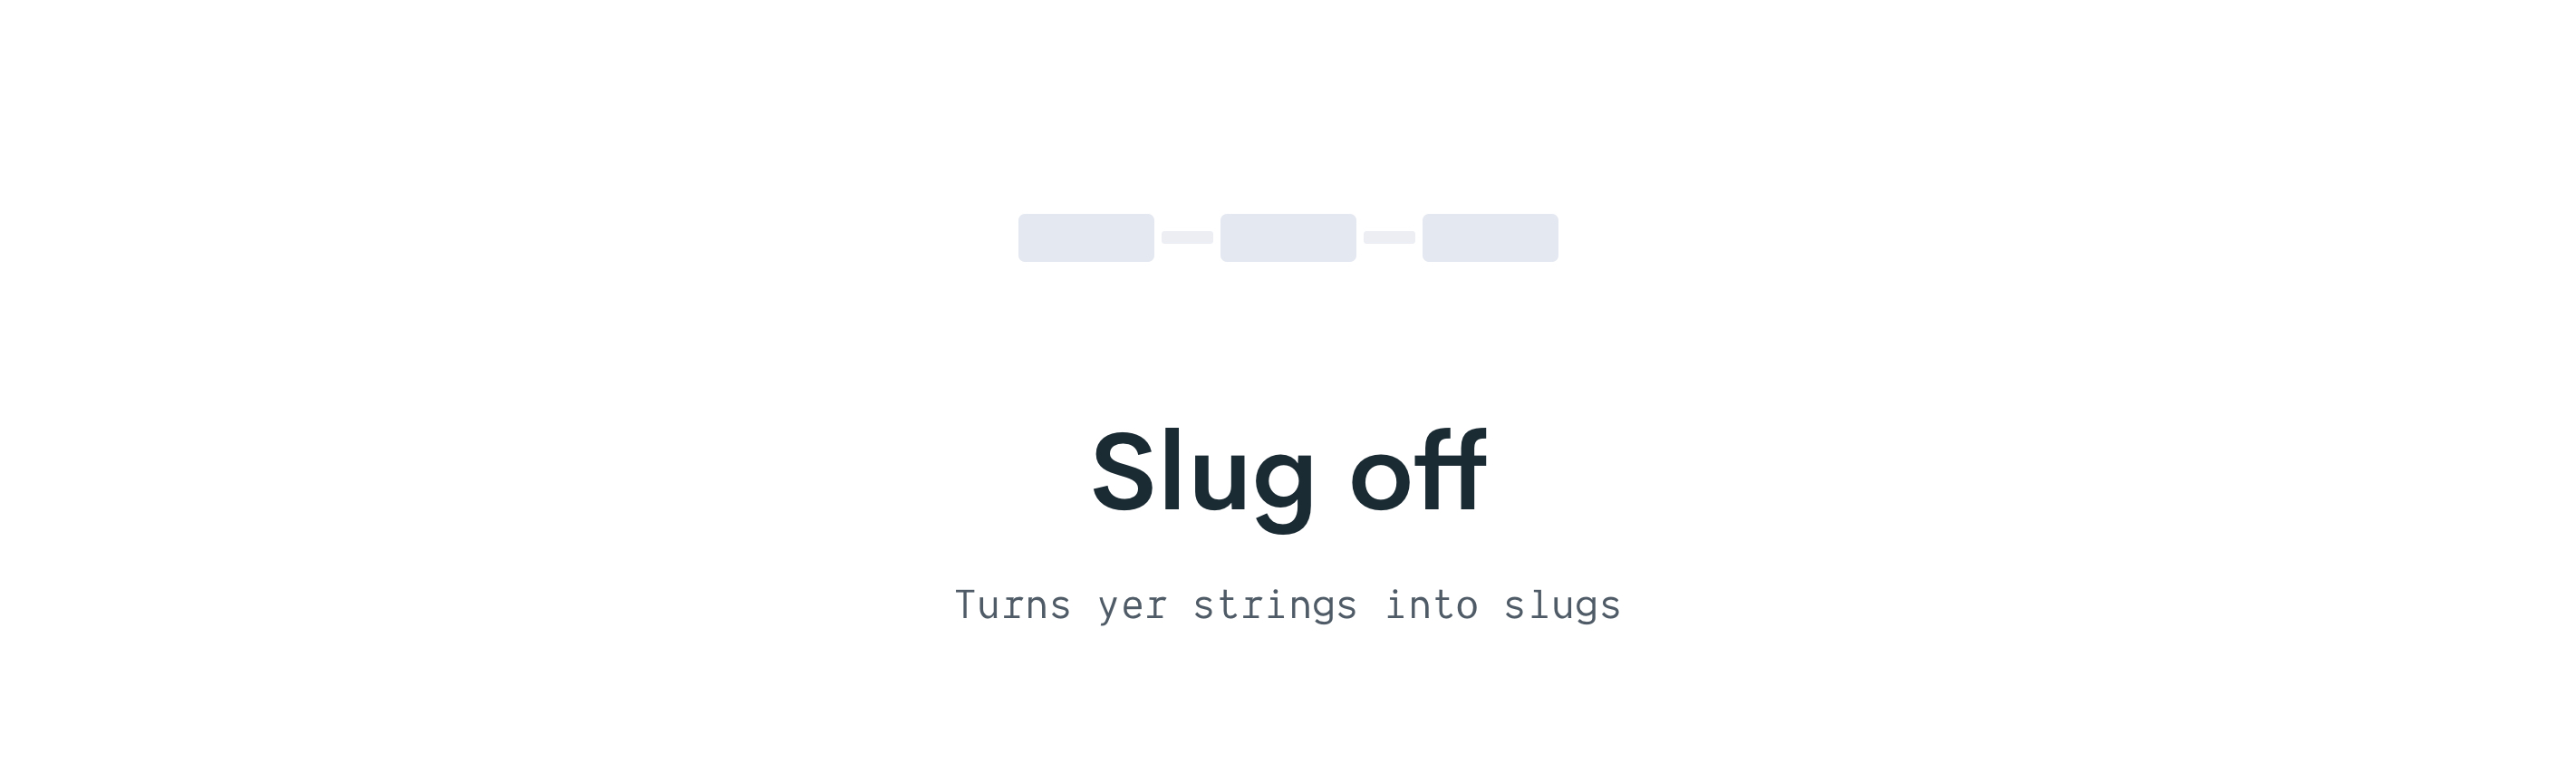 Slug off